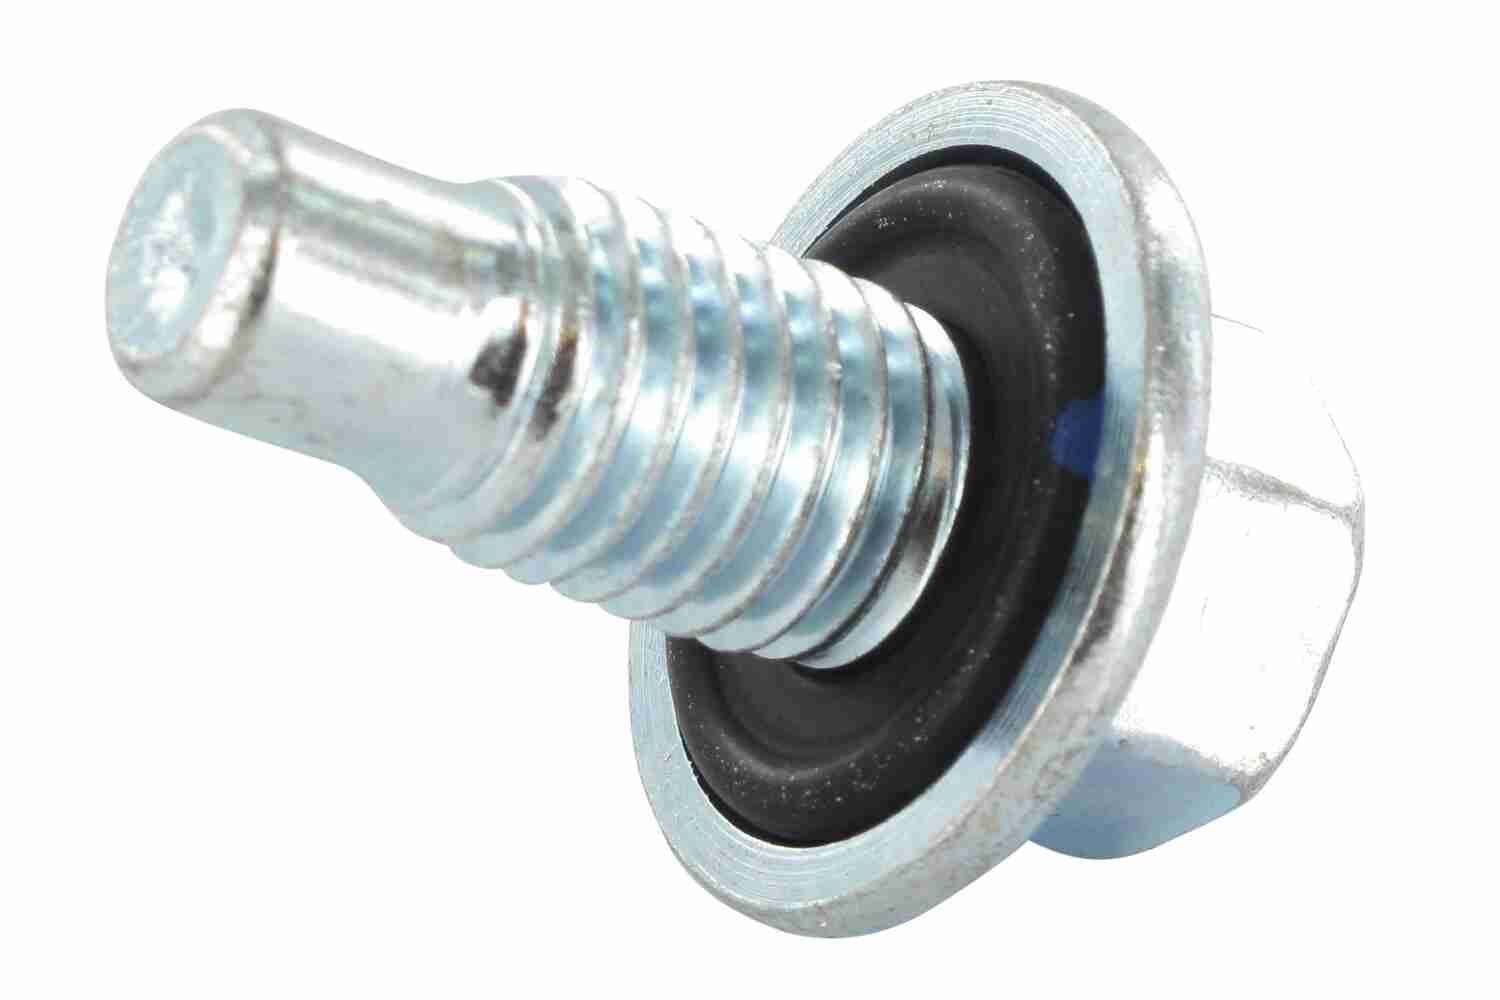 V40-0755 Drain Plug V40-0755 VAICO M12 x 1,75, Spanner Size: 15, with seal ring, Original VAICO Quality